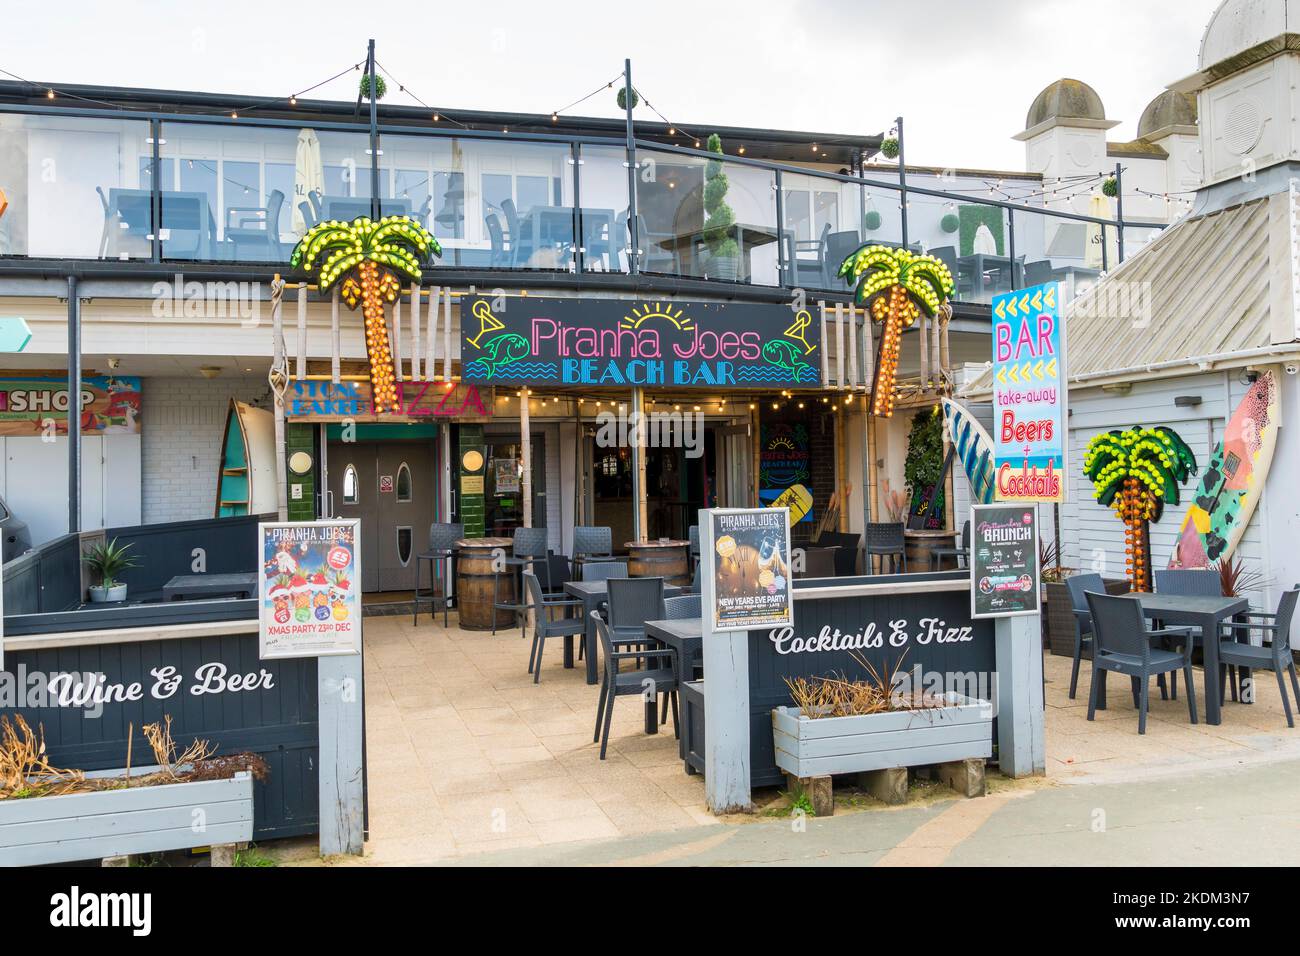 Piranha Joes Beach Bar Claremont pier Lowestoft seafront 2022 Stock Photo